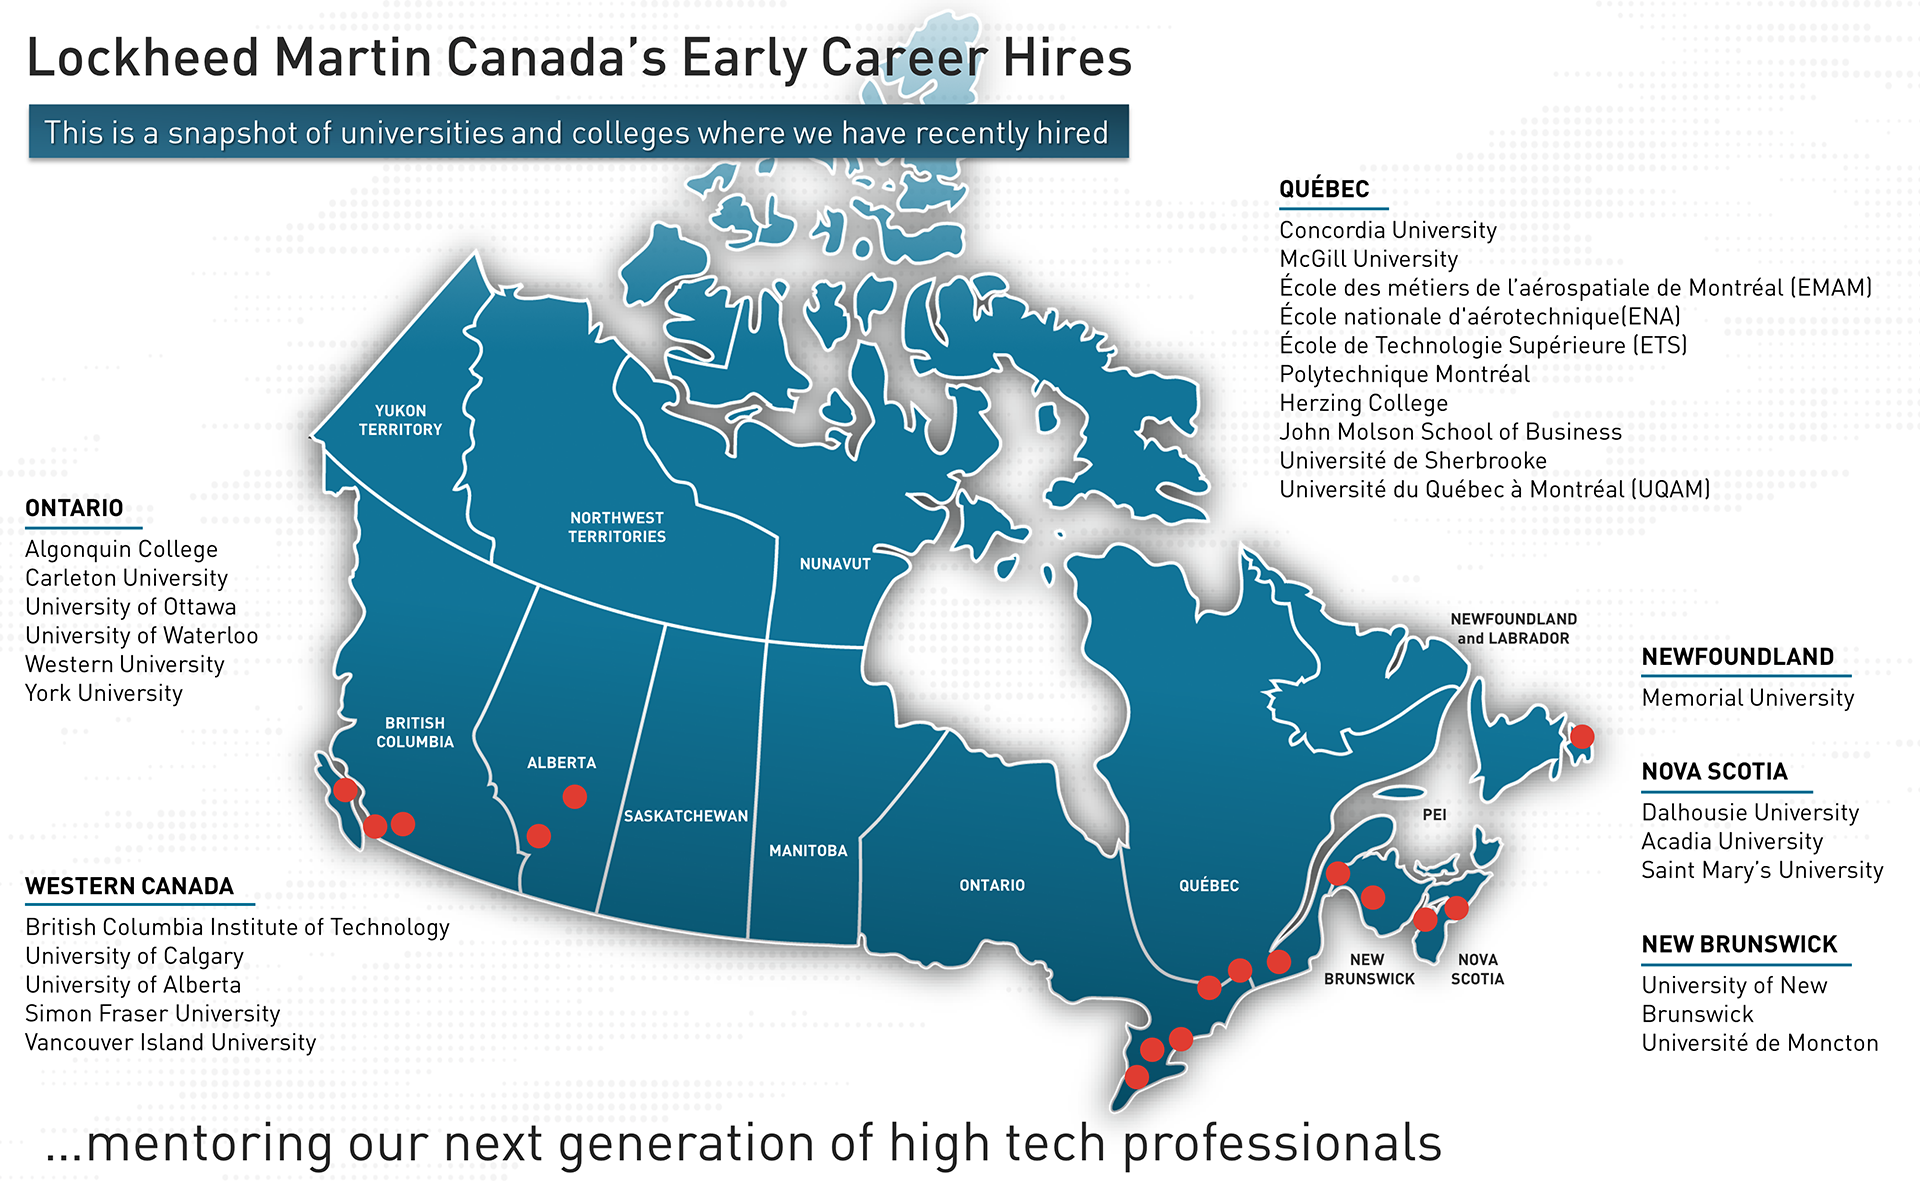 Lockheed Martin Canada Early Career Hires Map